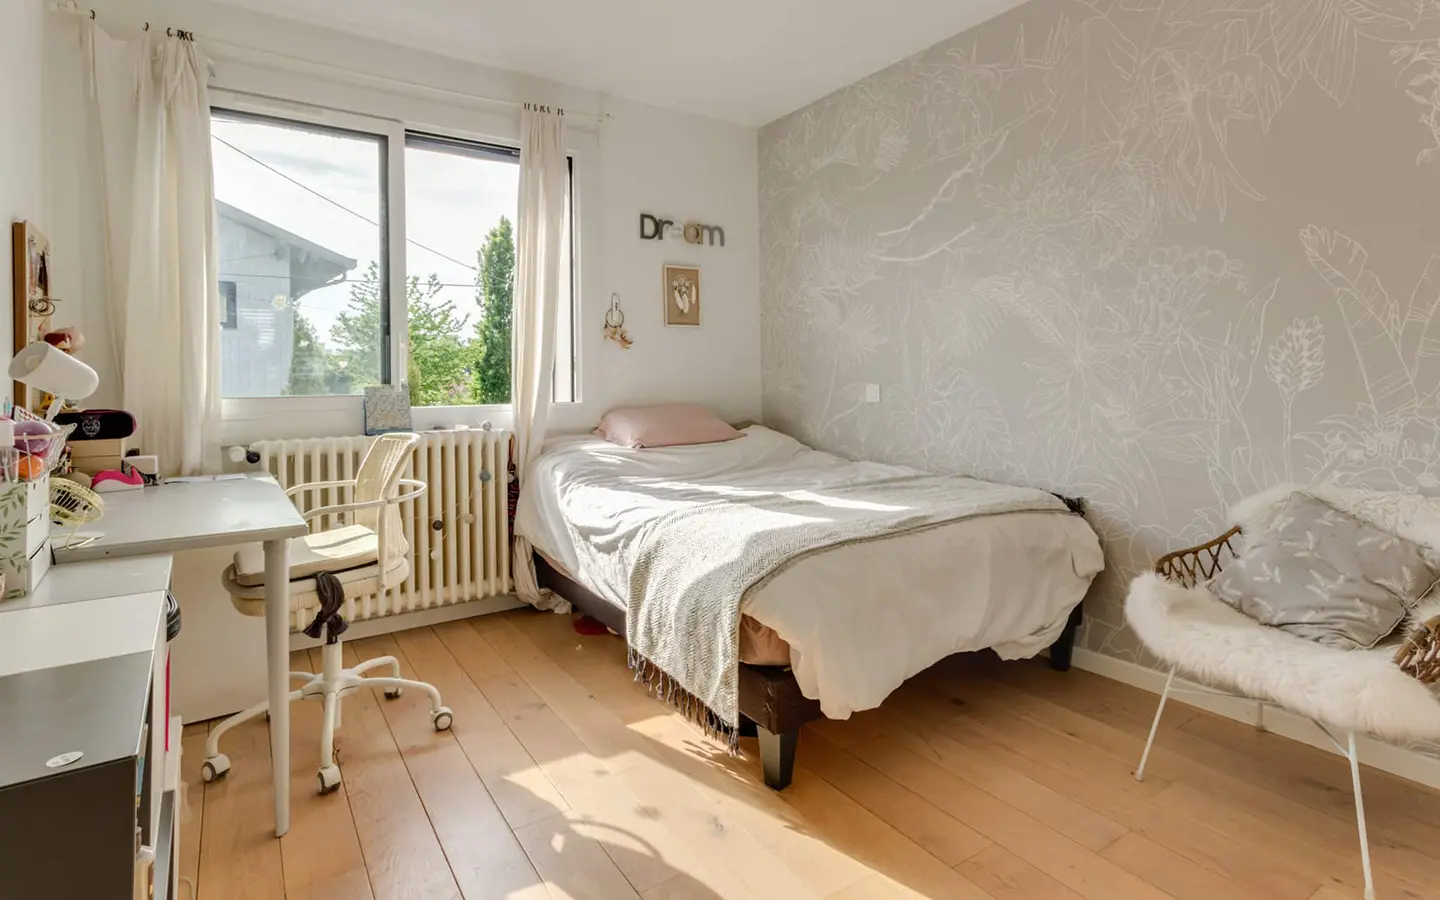 Achat immobilier appartement Annecy-le-vieux chambre ado